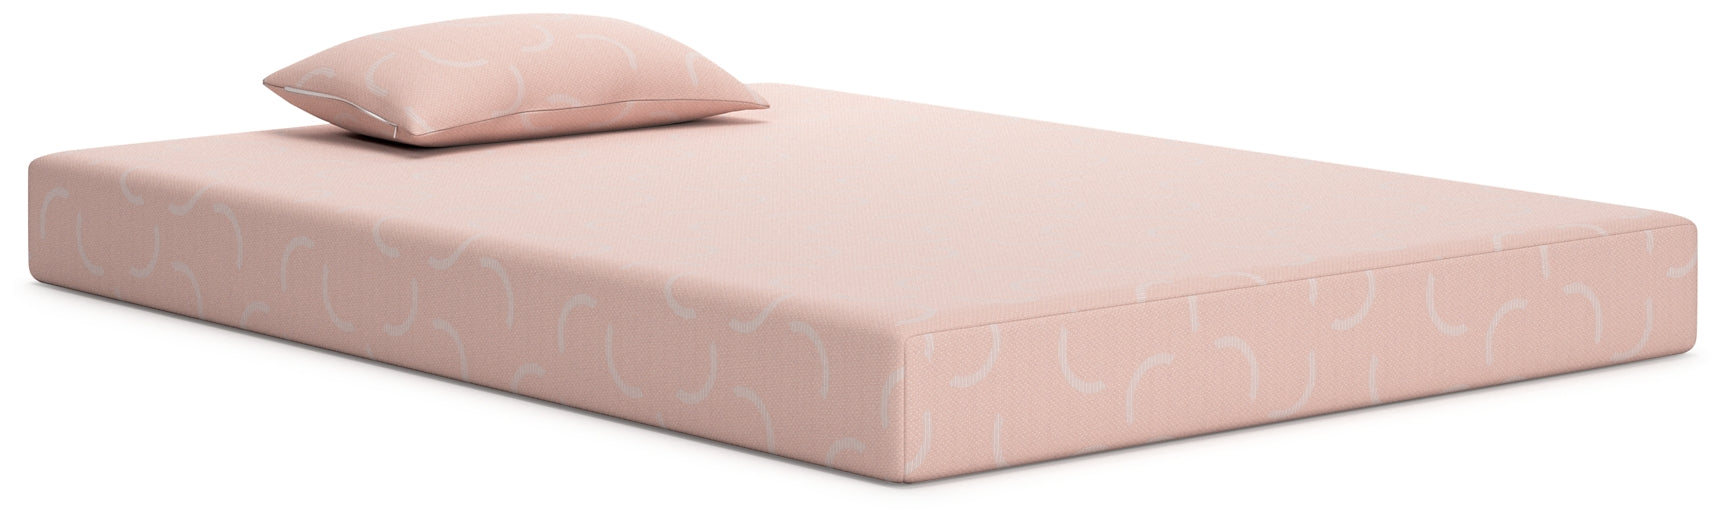 iKidz Coral Twin Mattress and Pillow 2/CN Sierra Sleep® by Ashley